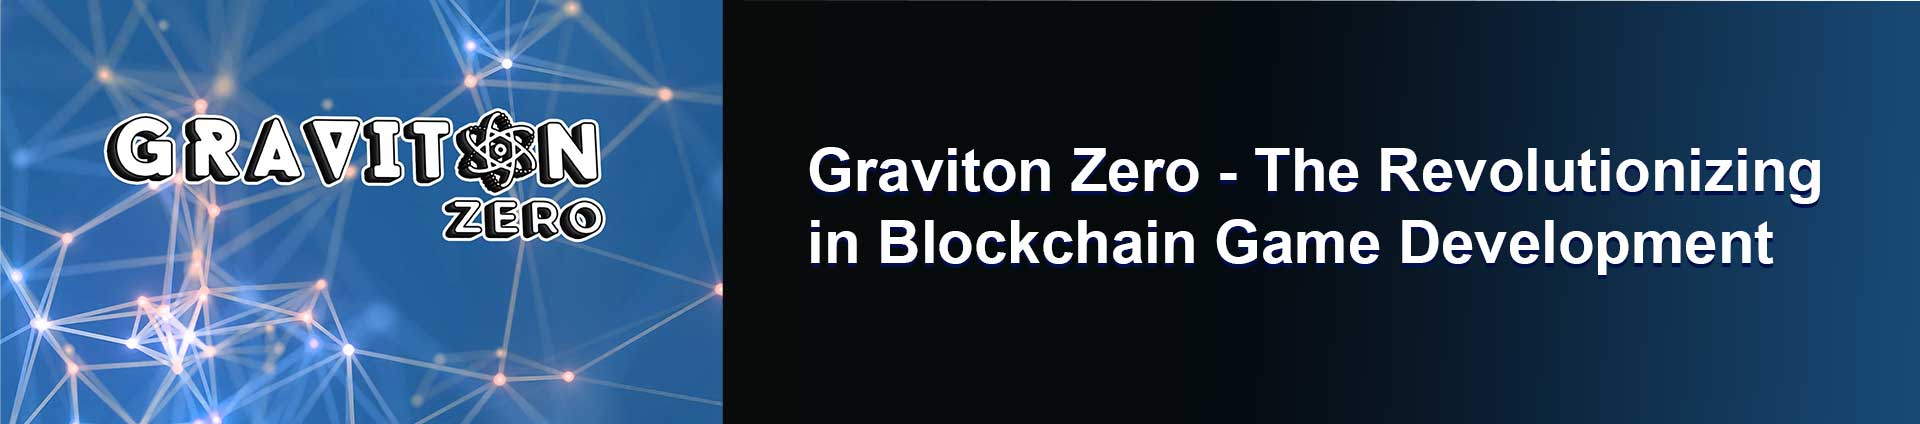 Graviton-Zero-in-Blockchain-Game-Development